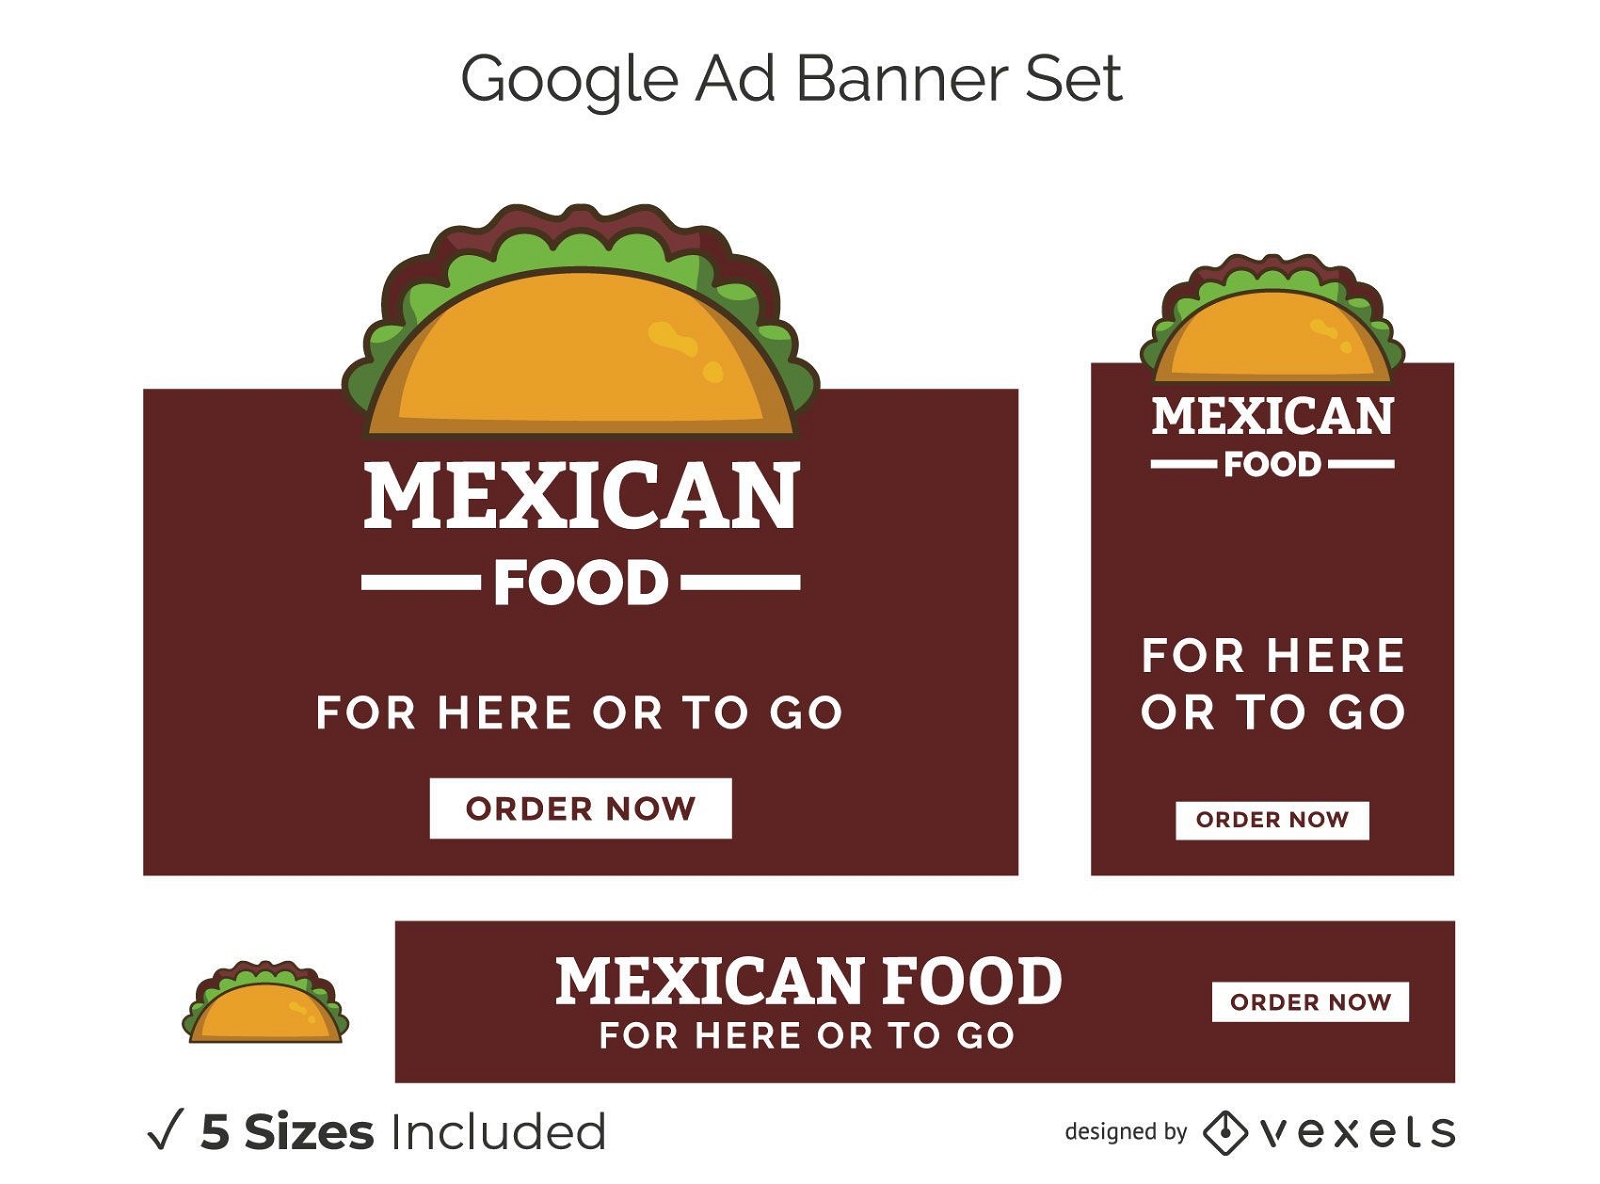 Conjunto de banners de anuncios de Google de comida mexicana